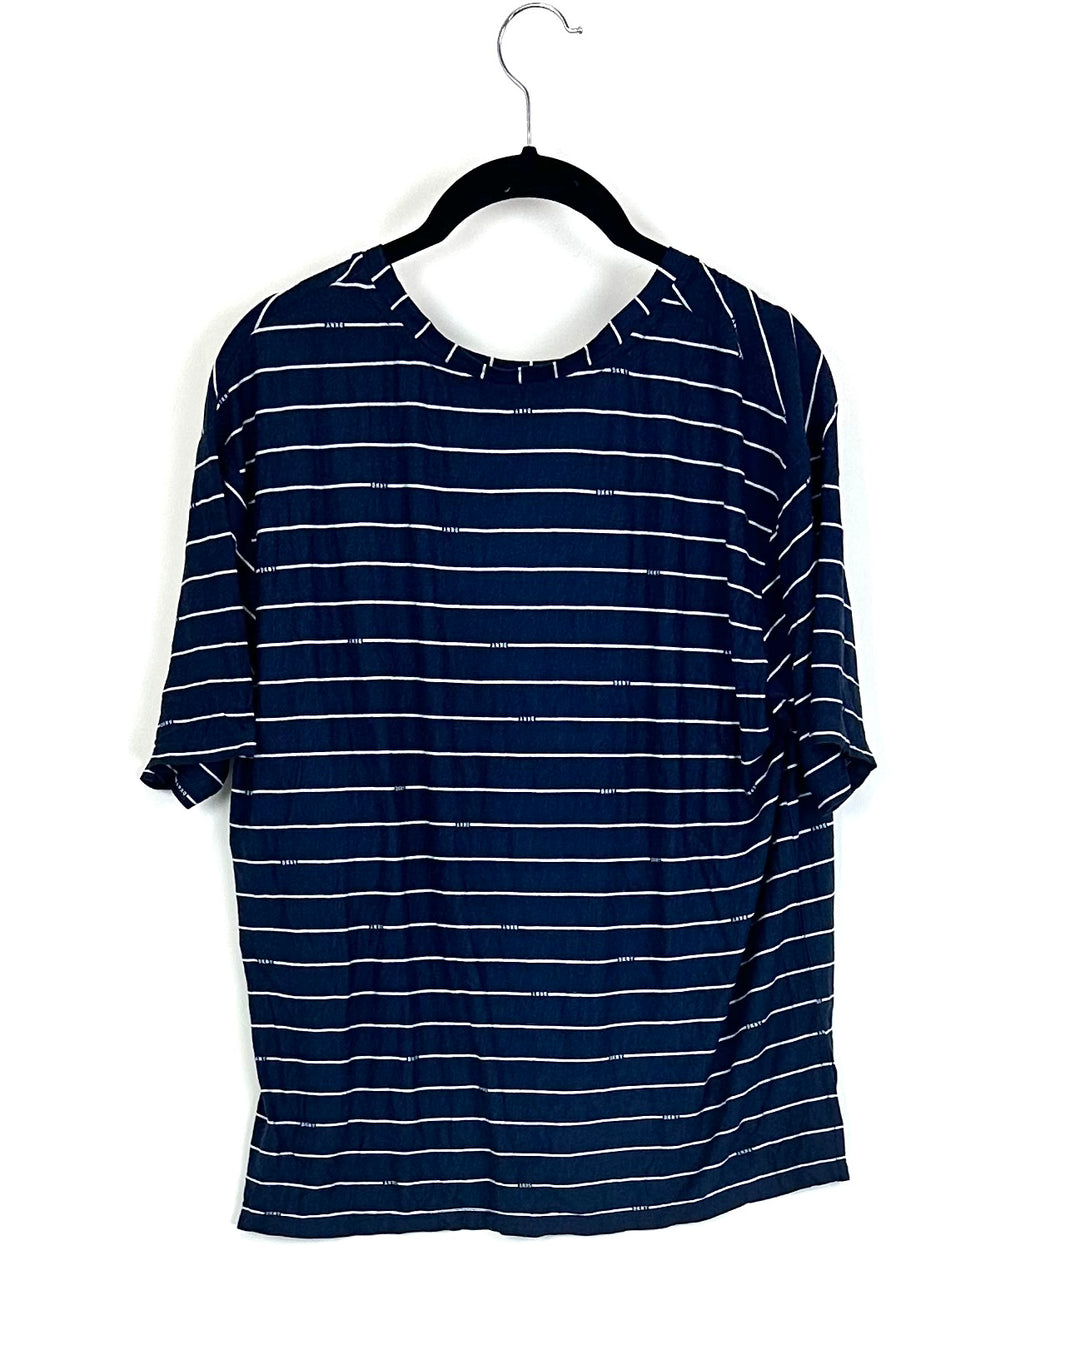 Striped Sleepwear Shirt - Small